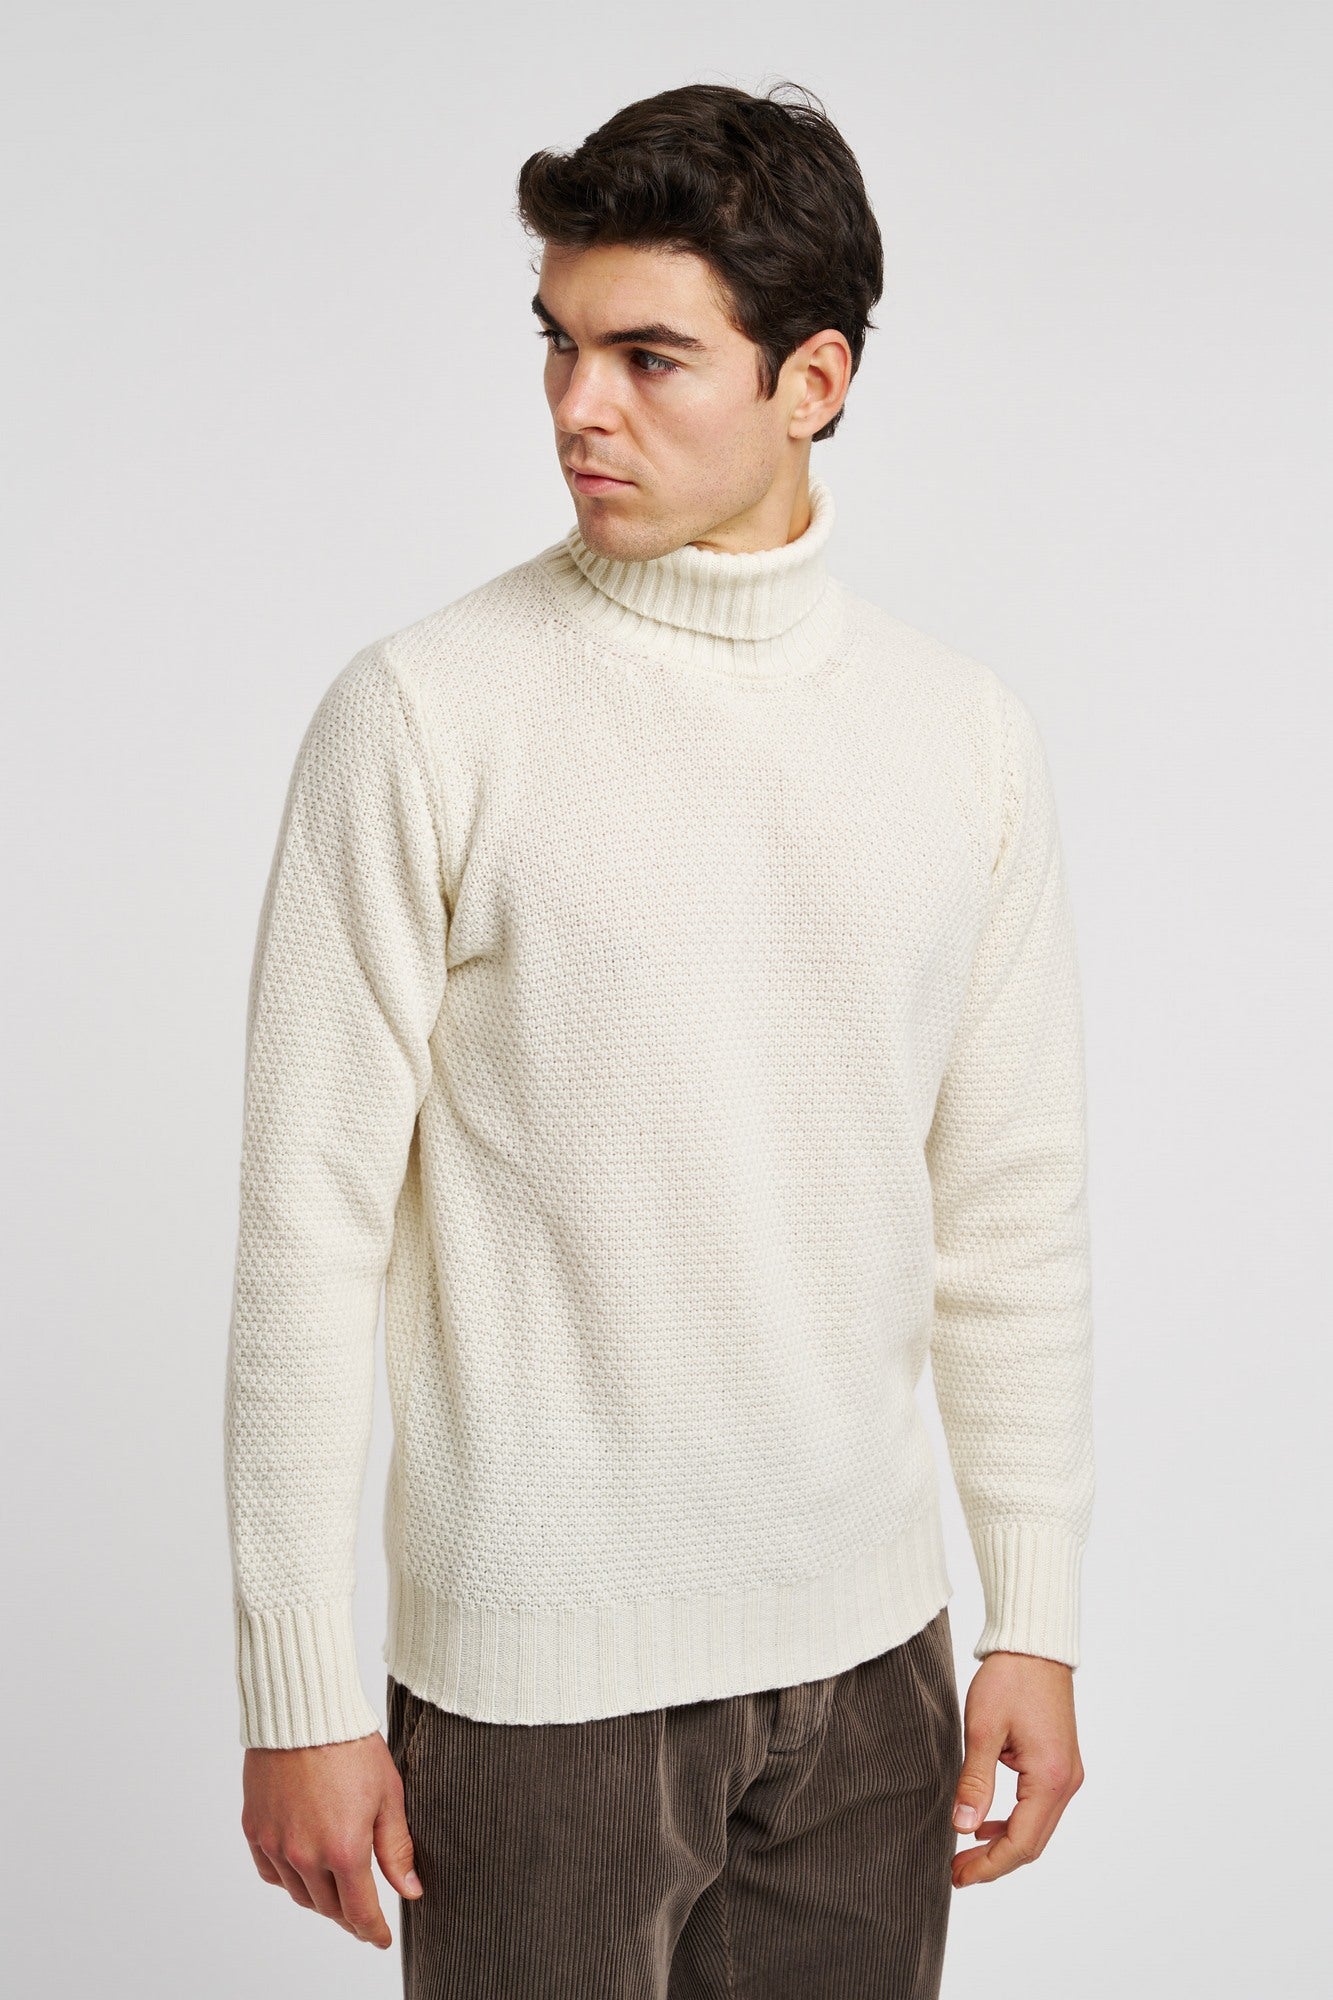 L.B.M. 1911 Cream Wool Blend Turtleneck Sweater - 5